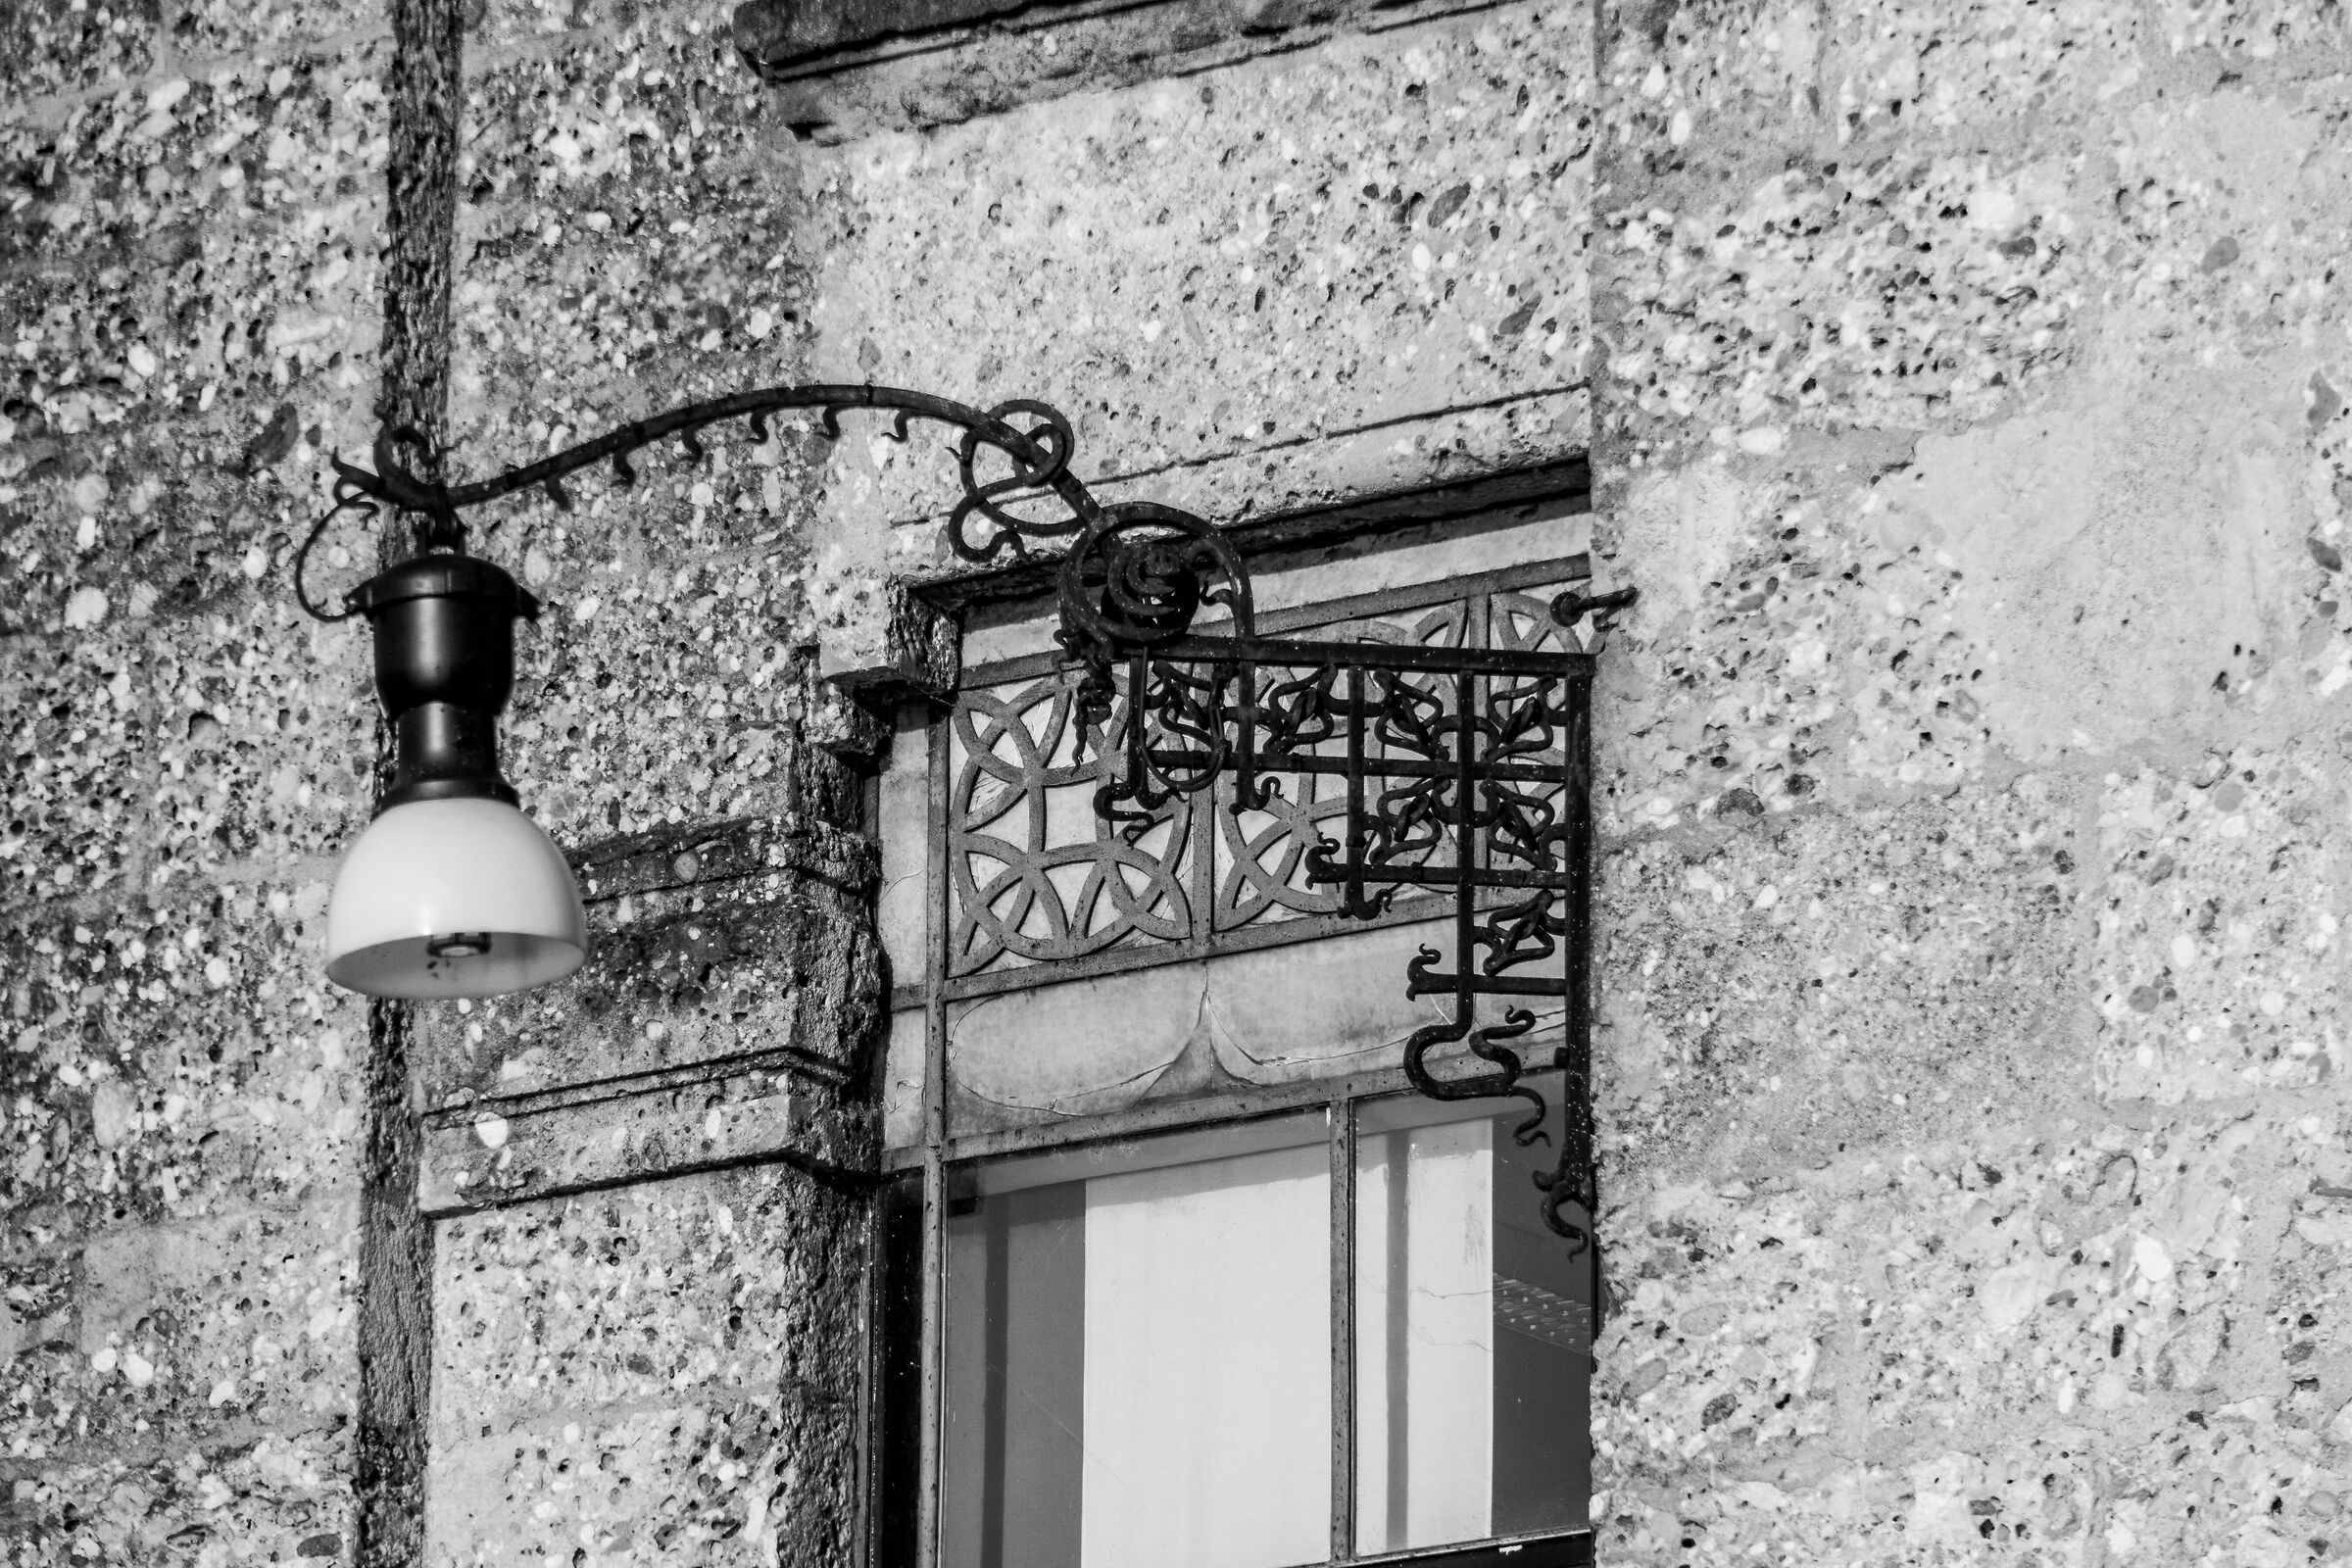 One of the original Art Nouveau street lamps...